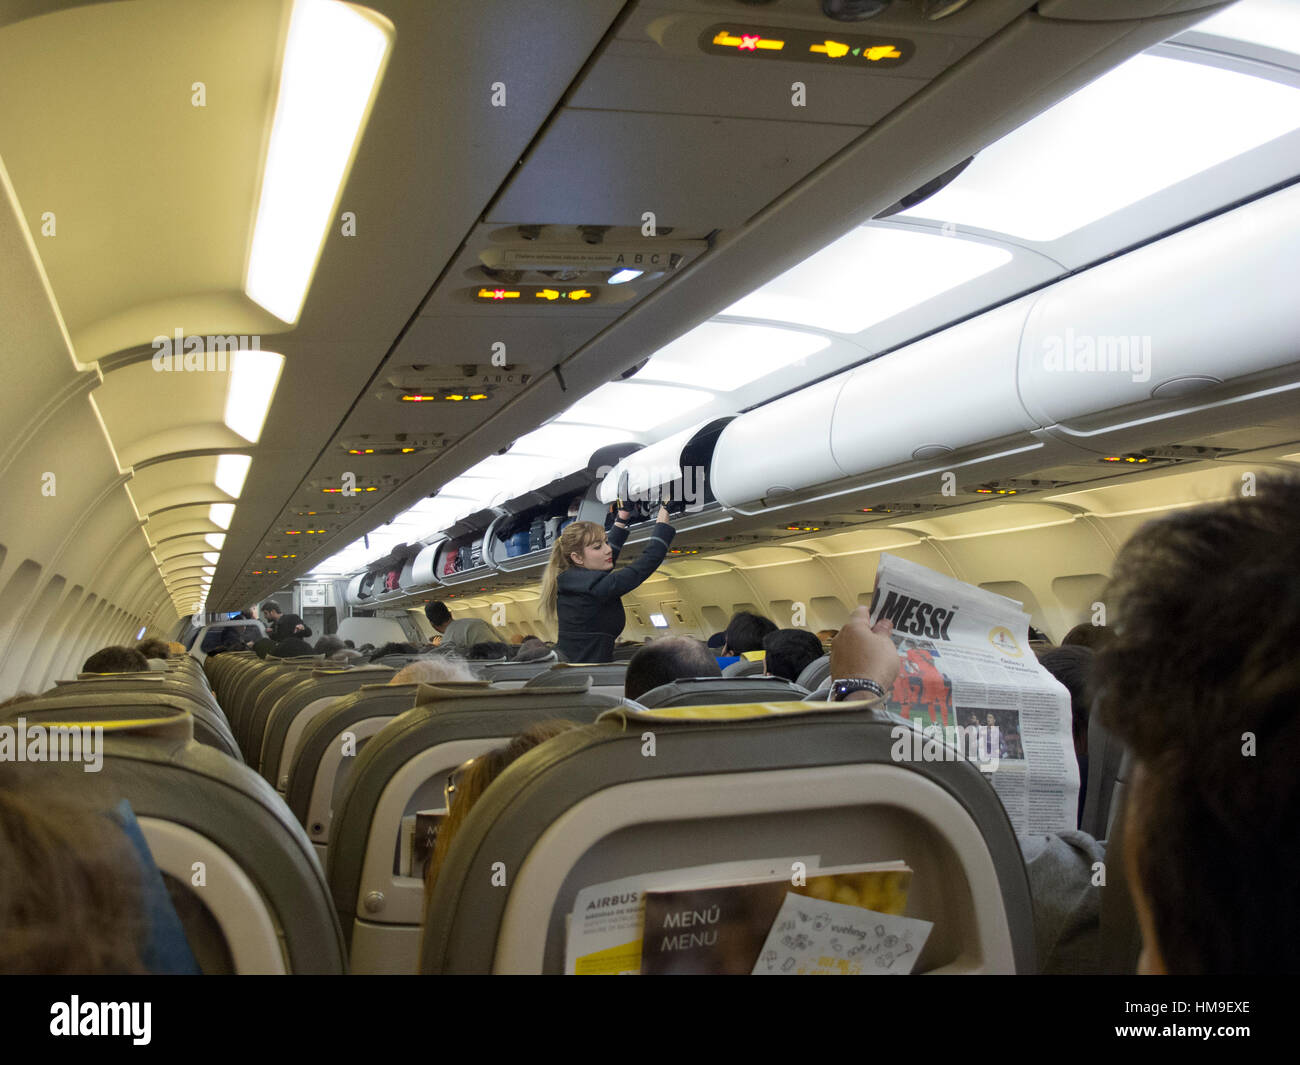 Innenszene Flugzeug, Flughafen Barcelona, Vueling Airlines Flug Abfahrt  Internat Stewardess Handgepäck Gepäck Overhead Stockfotografie - Alamy